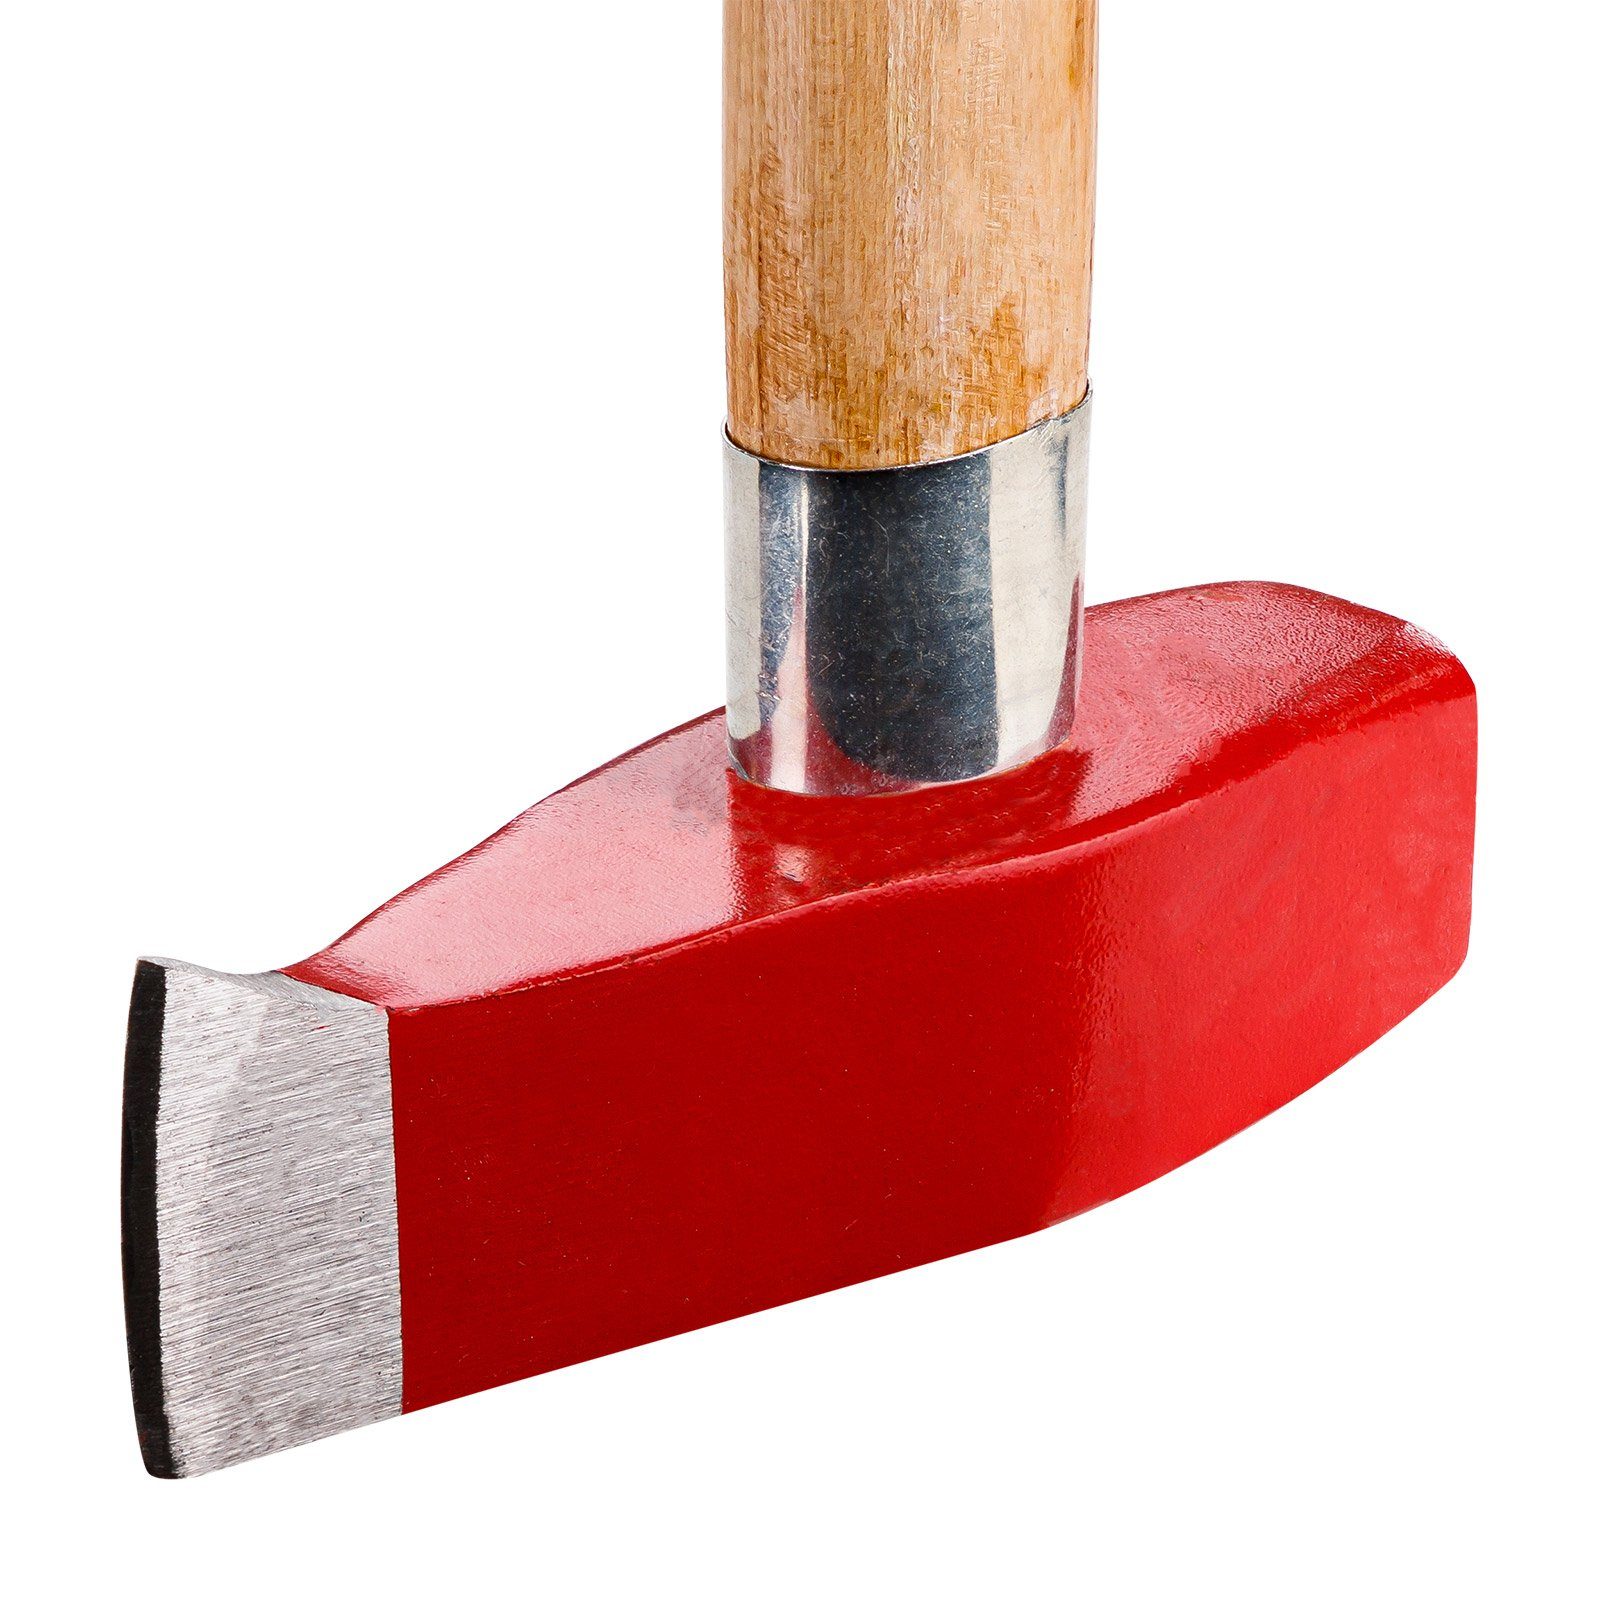 Hammer Spaltaxt Hickory / 3kg DEMA Spalthammer